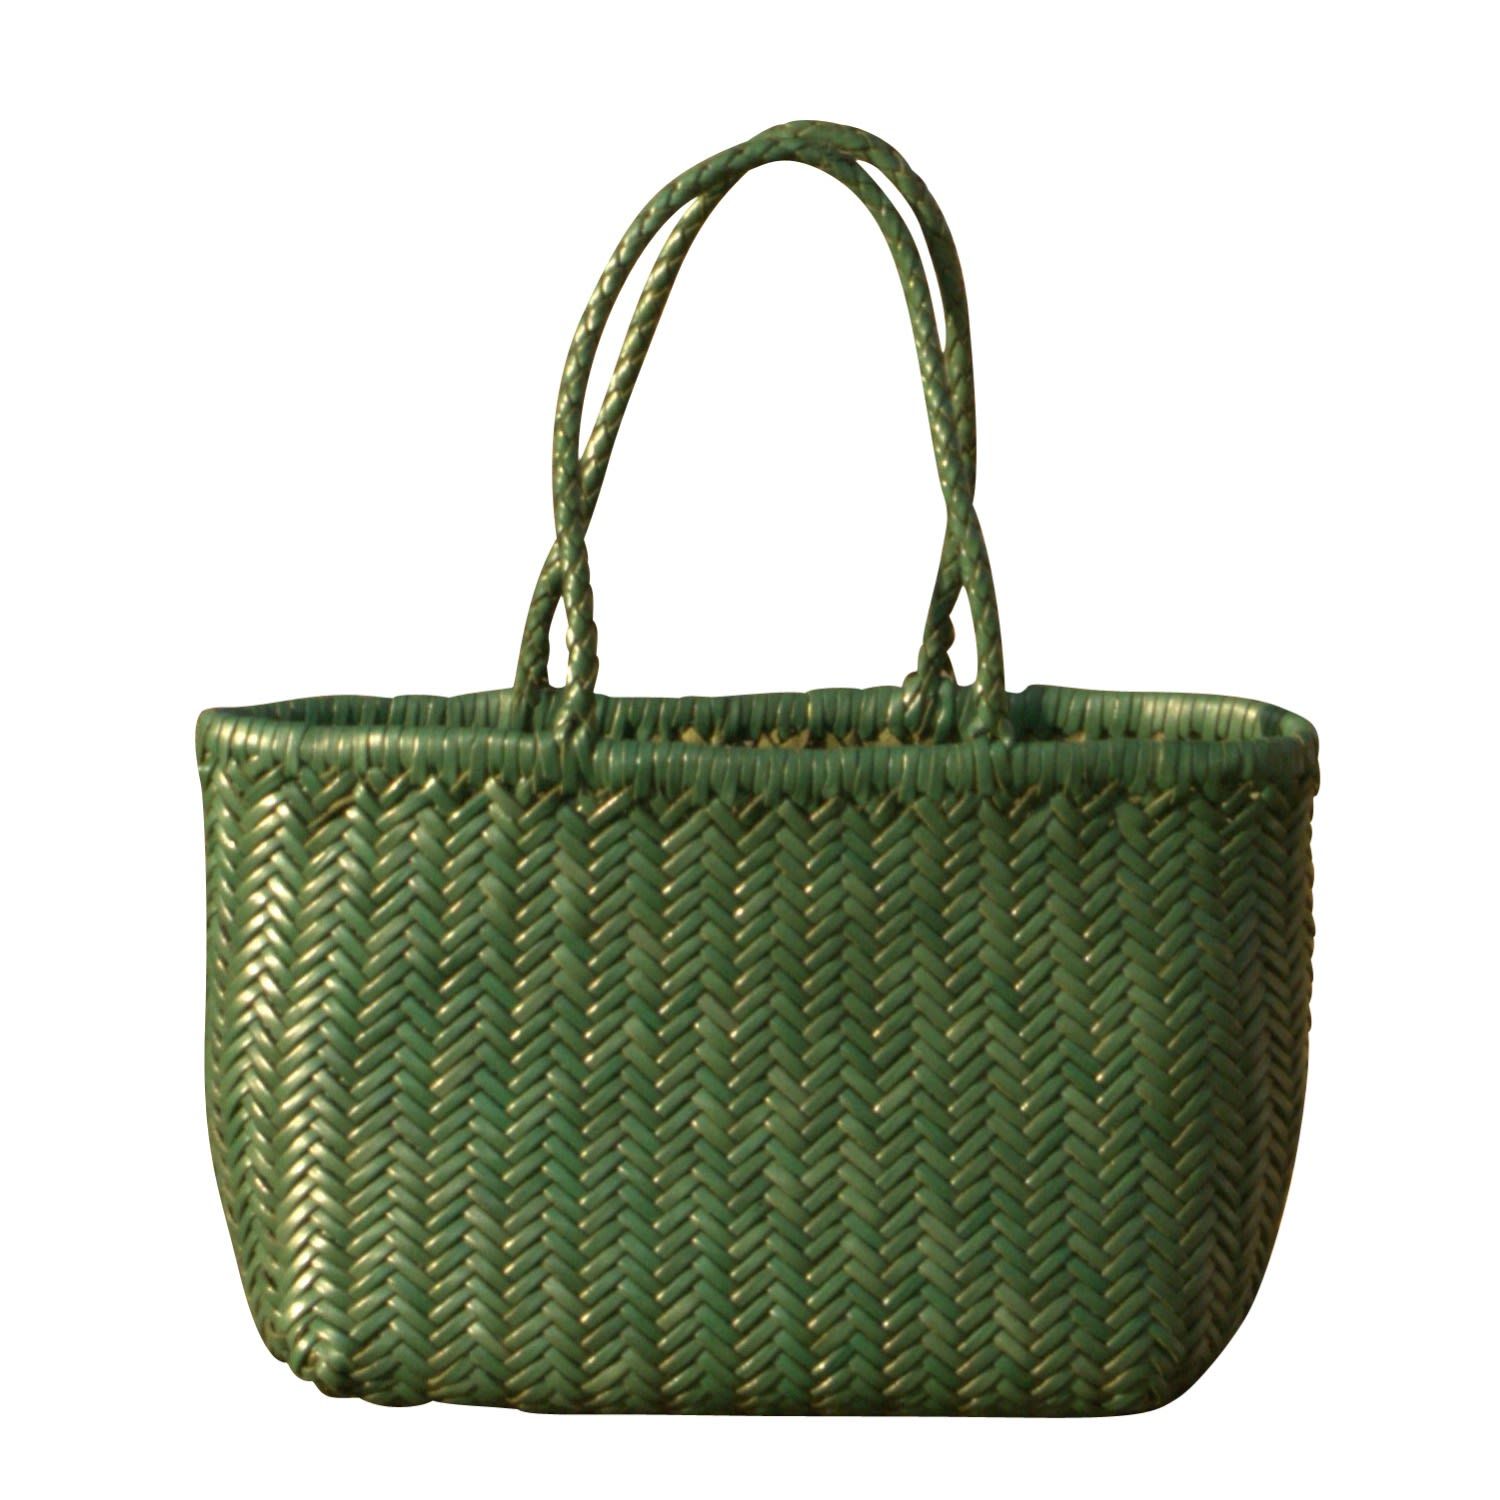 Zigzag Woven Leather Handbag 'Viviana'  Medium Size - Green | Wolf & Badger (US)